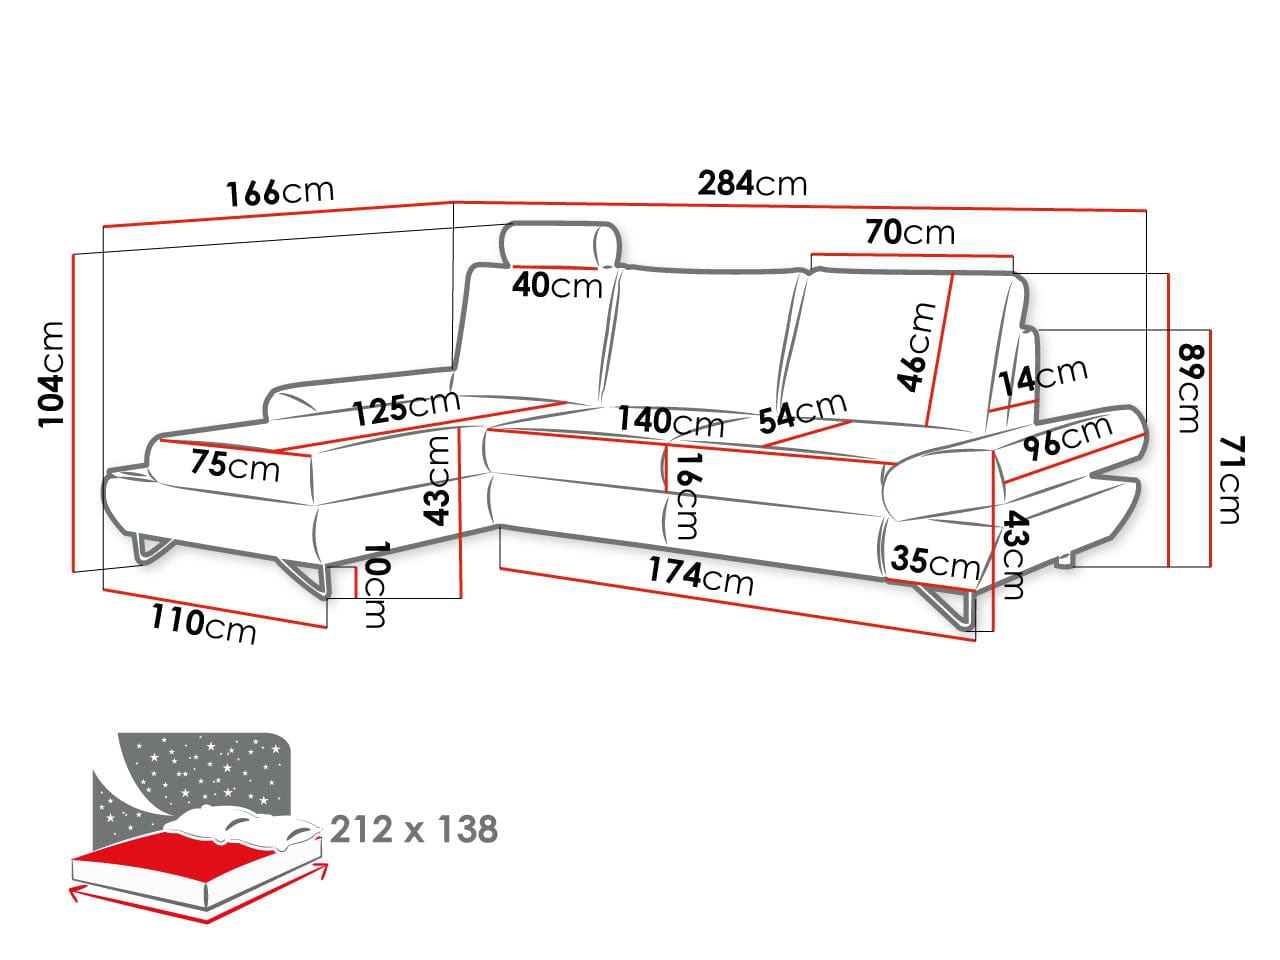 ASTRA Sectional Sleeper Sofa